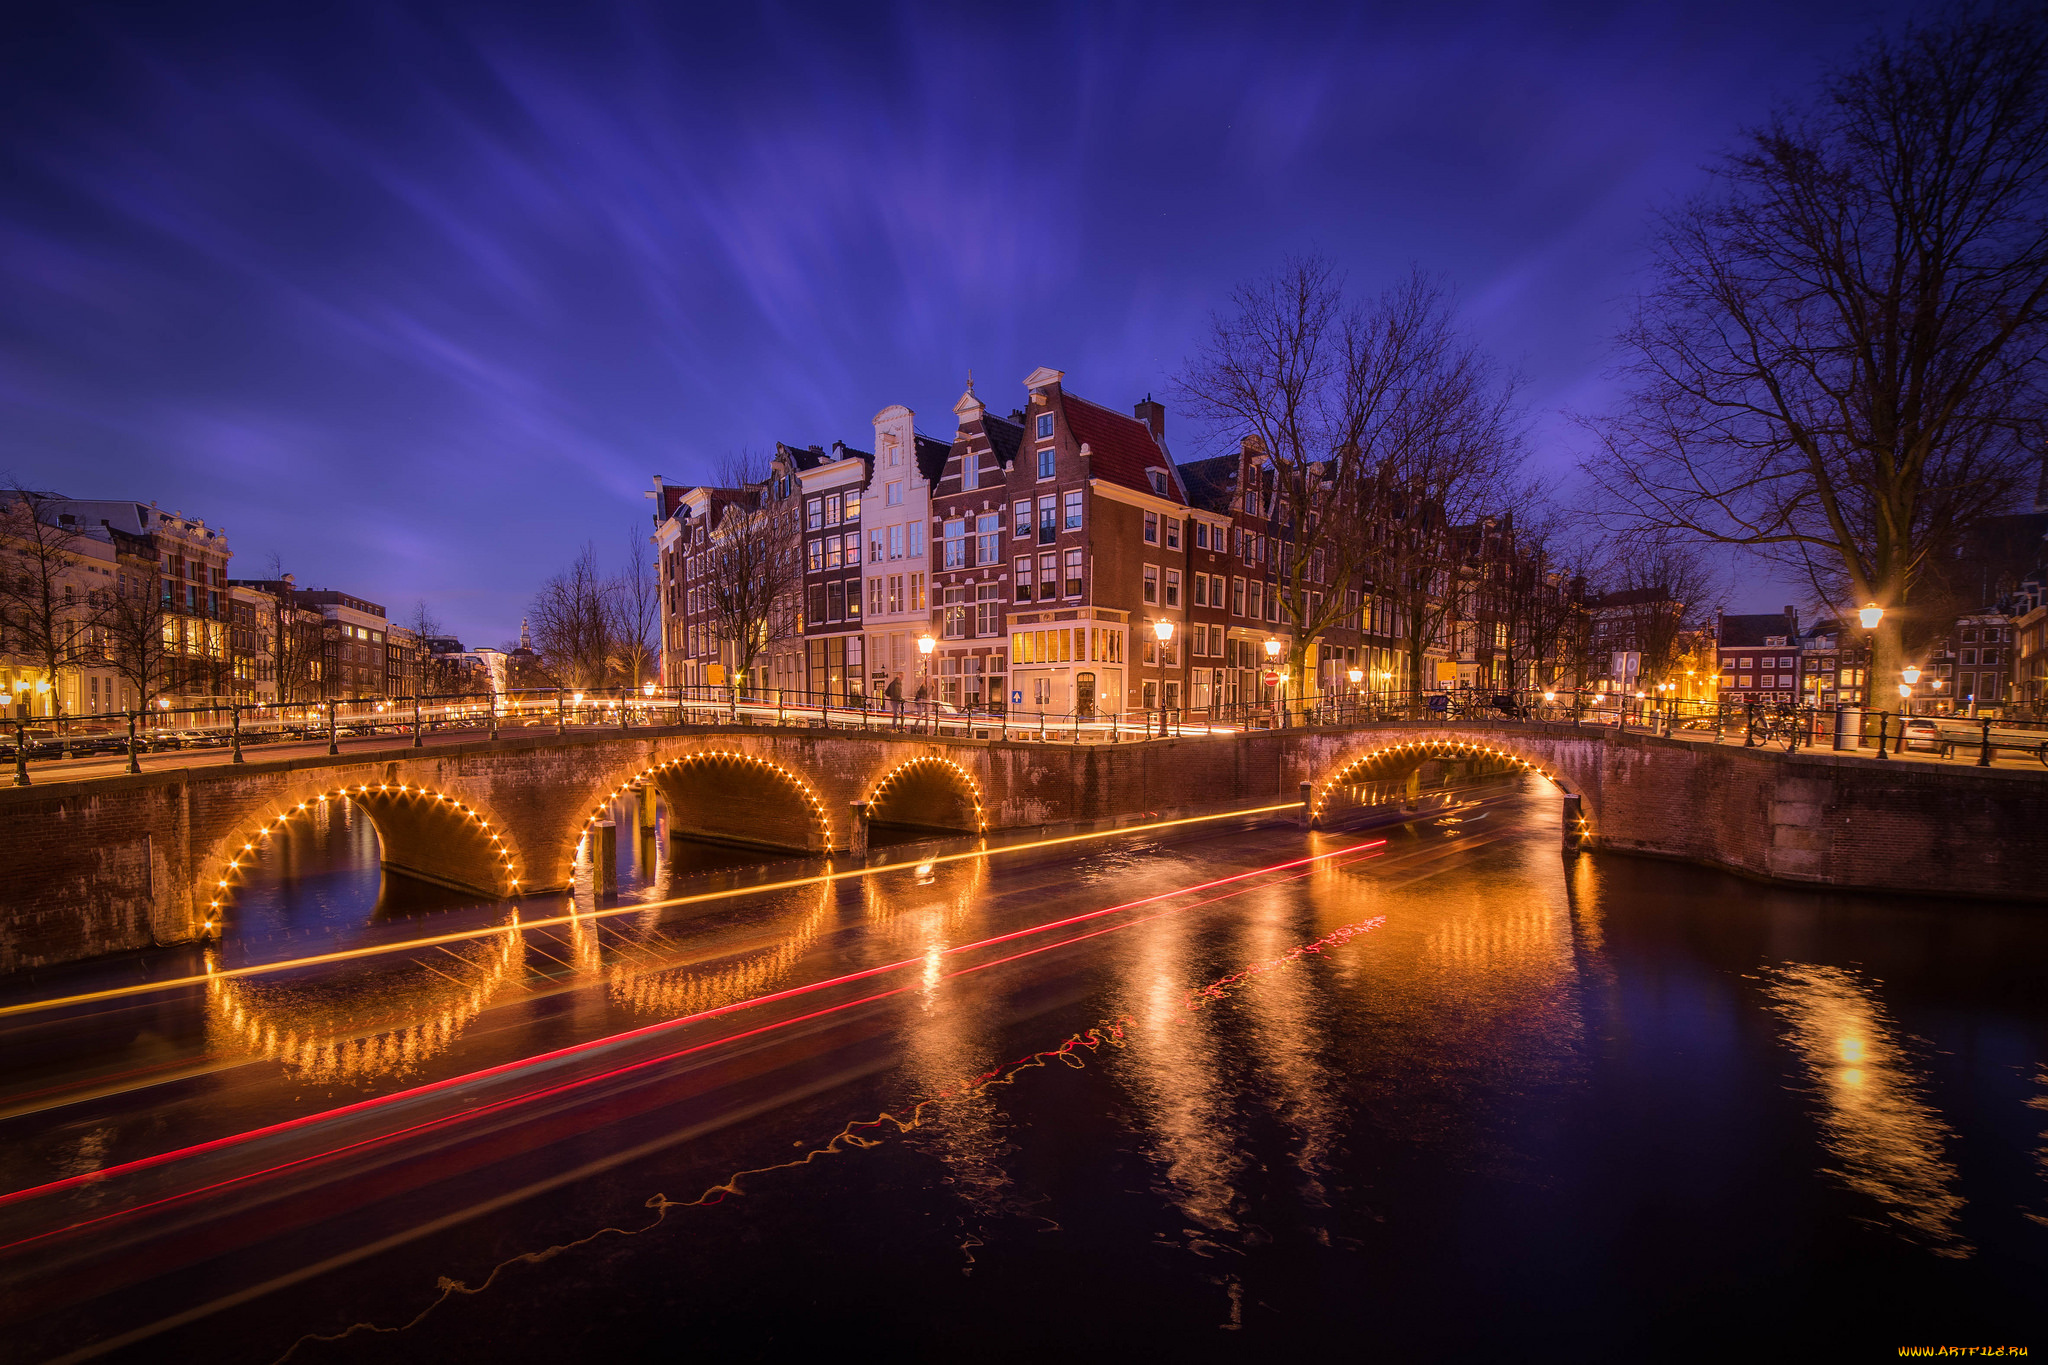 города, -, мосты, нидерланды, амстердам, мост, огни, канал, деревья, дома